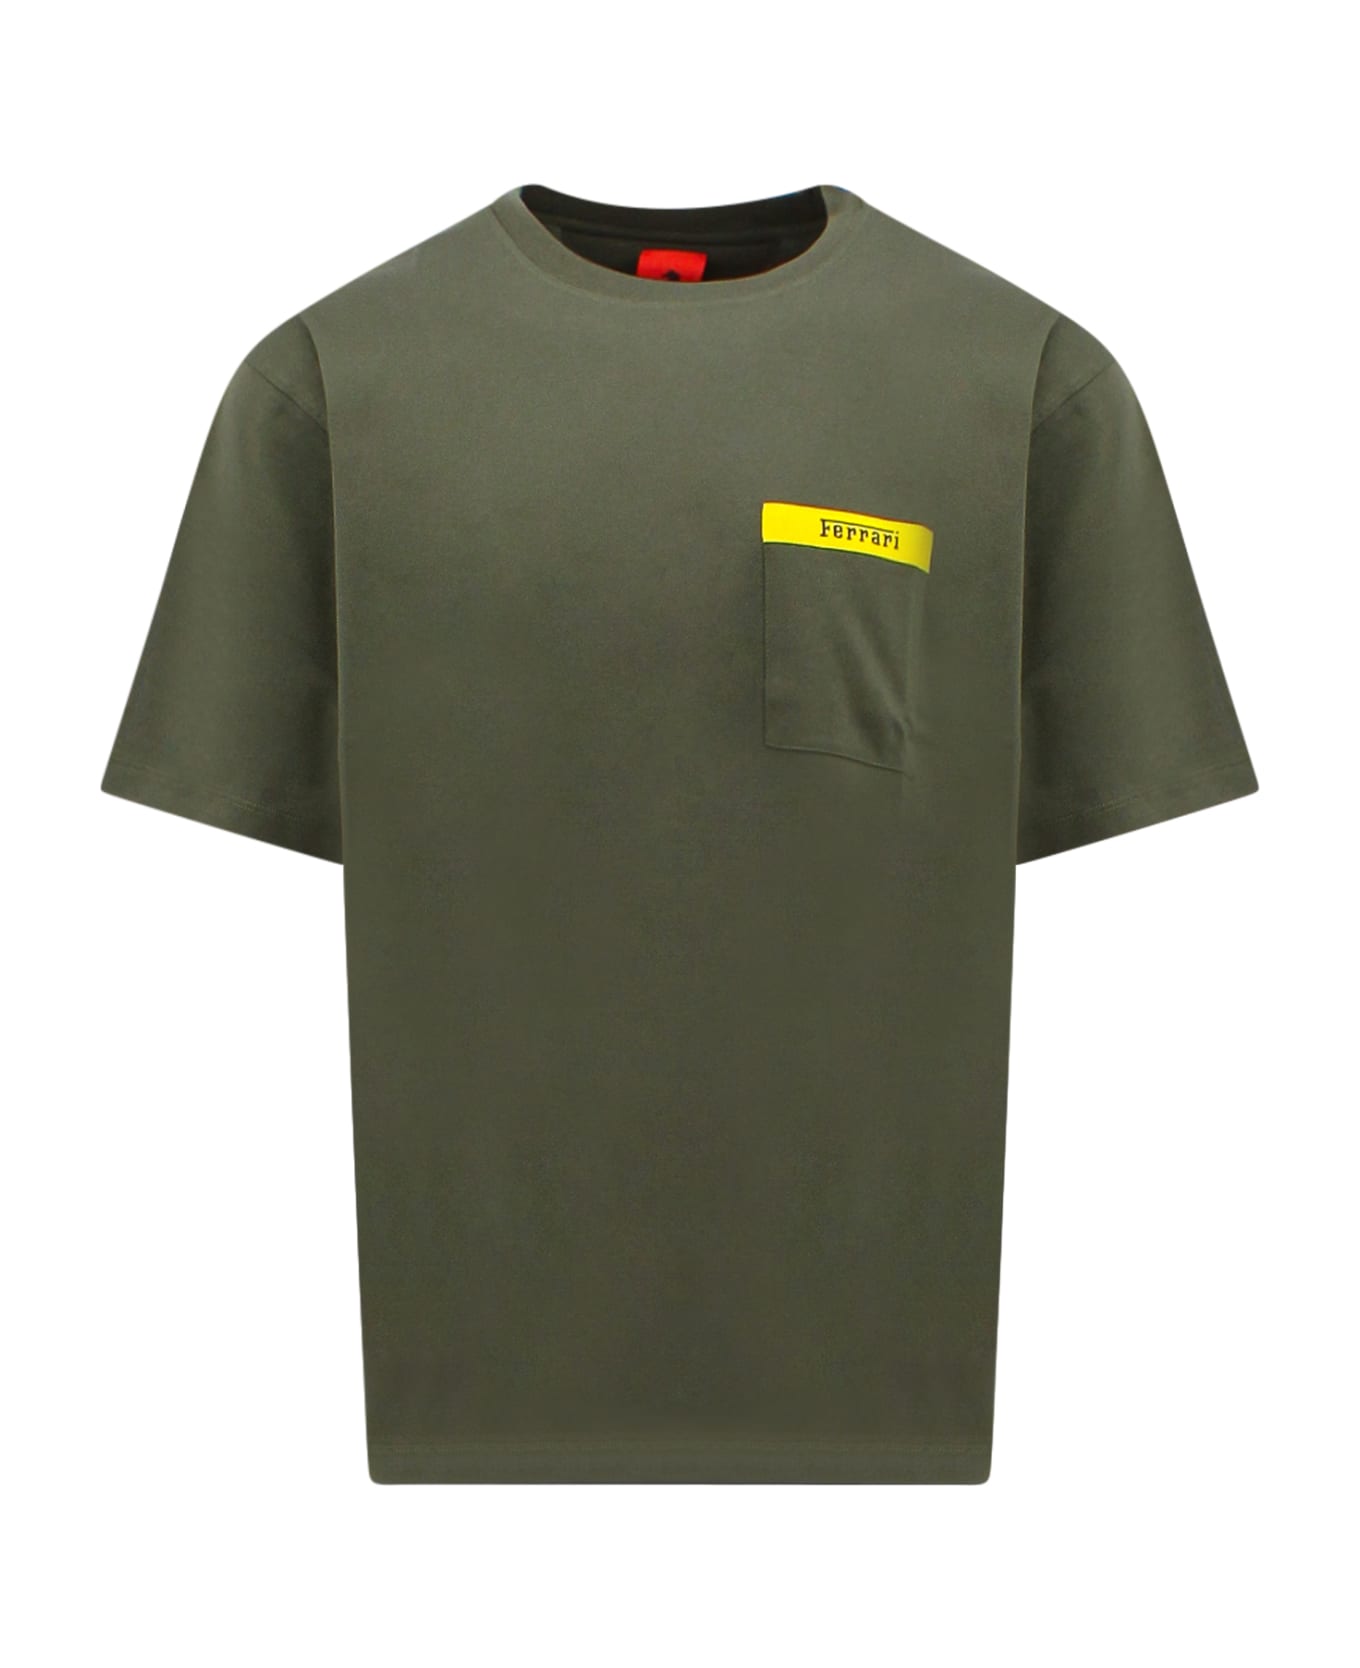 Ferrari T-shirt シャツ